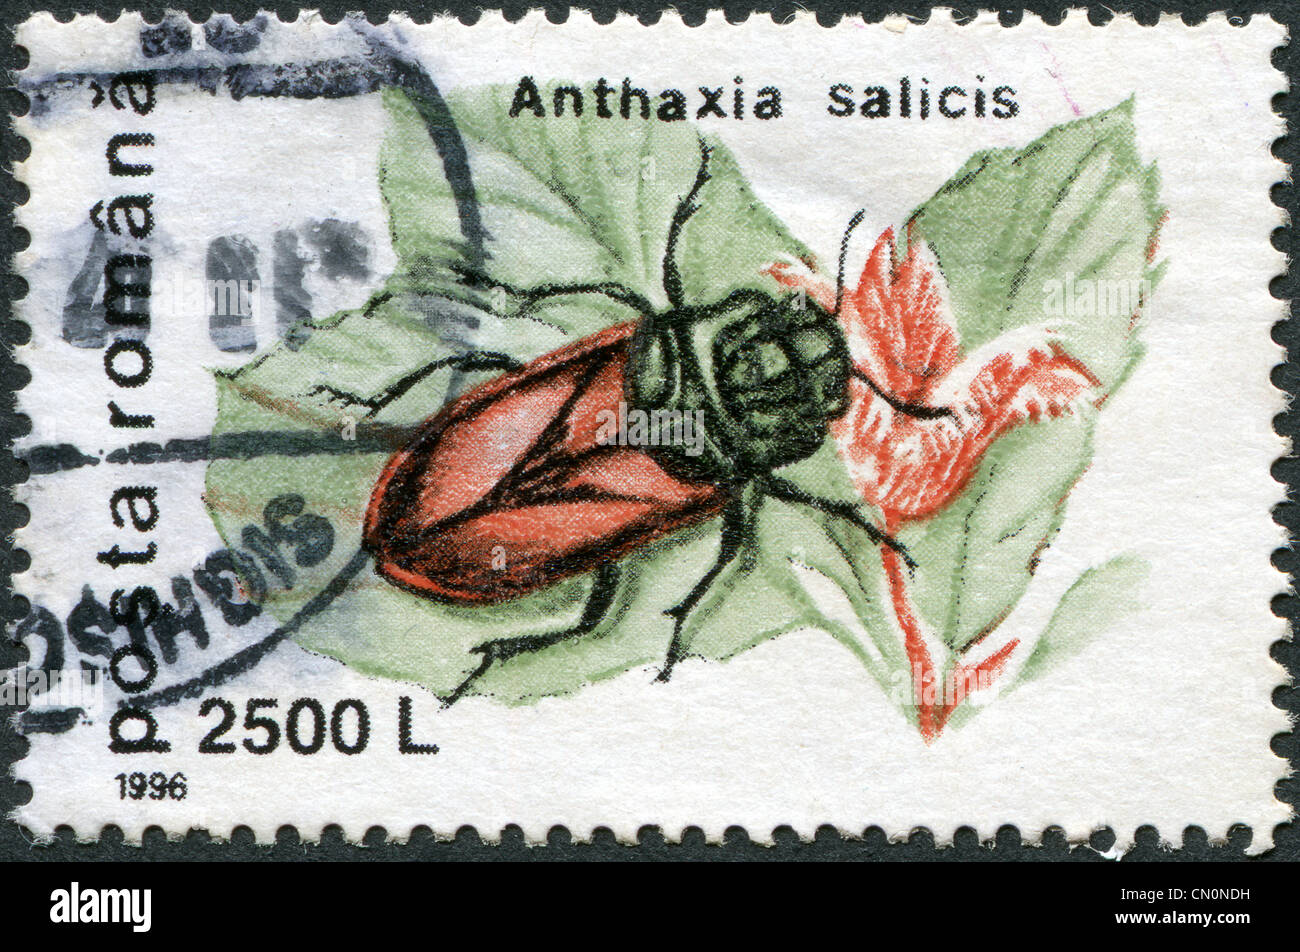 ROMANIA - CIRCA 1996: A stamp printed in Romania, shows a beetle Anthaxia salicis, circa 1996 Stock Photo